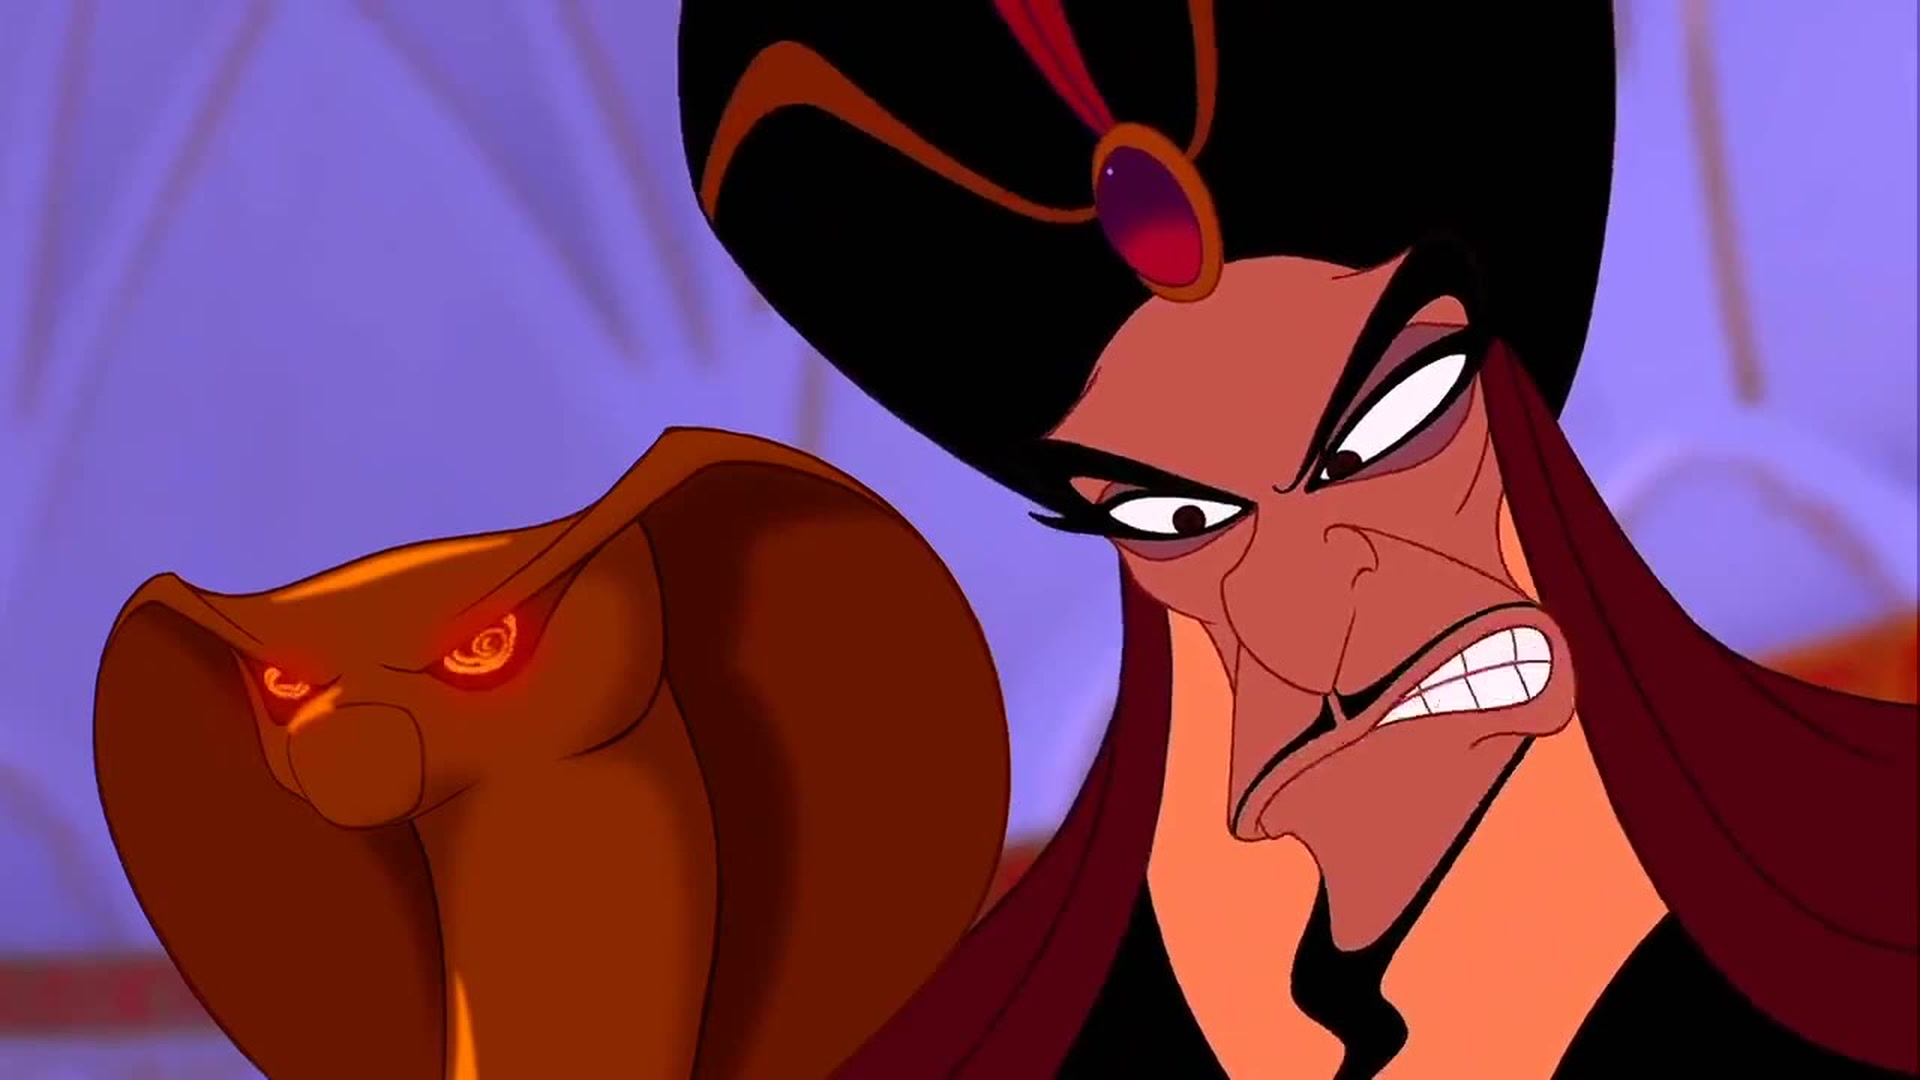 Disney Store JAPAN TSUM TSUM 2017 Villains Box Each Sell Jafar from Aladdin